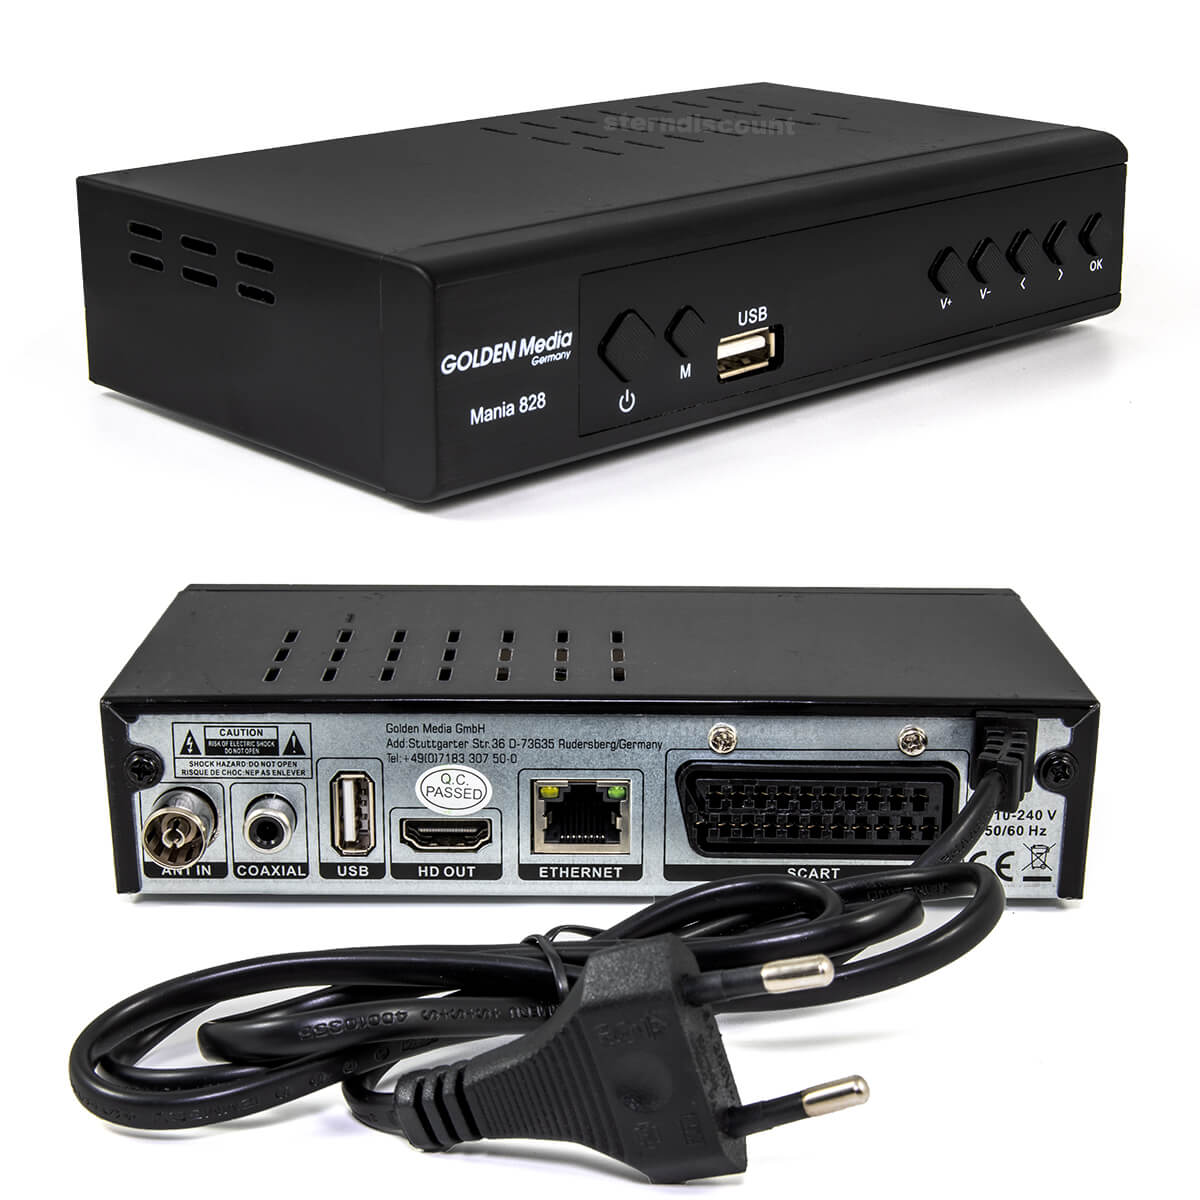 GM-Mania-828-DVB-C-T2-HD-receiver